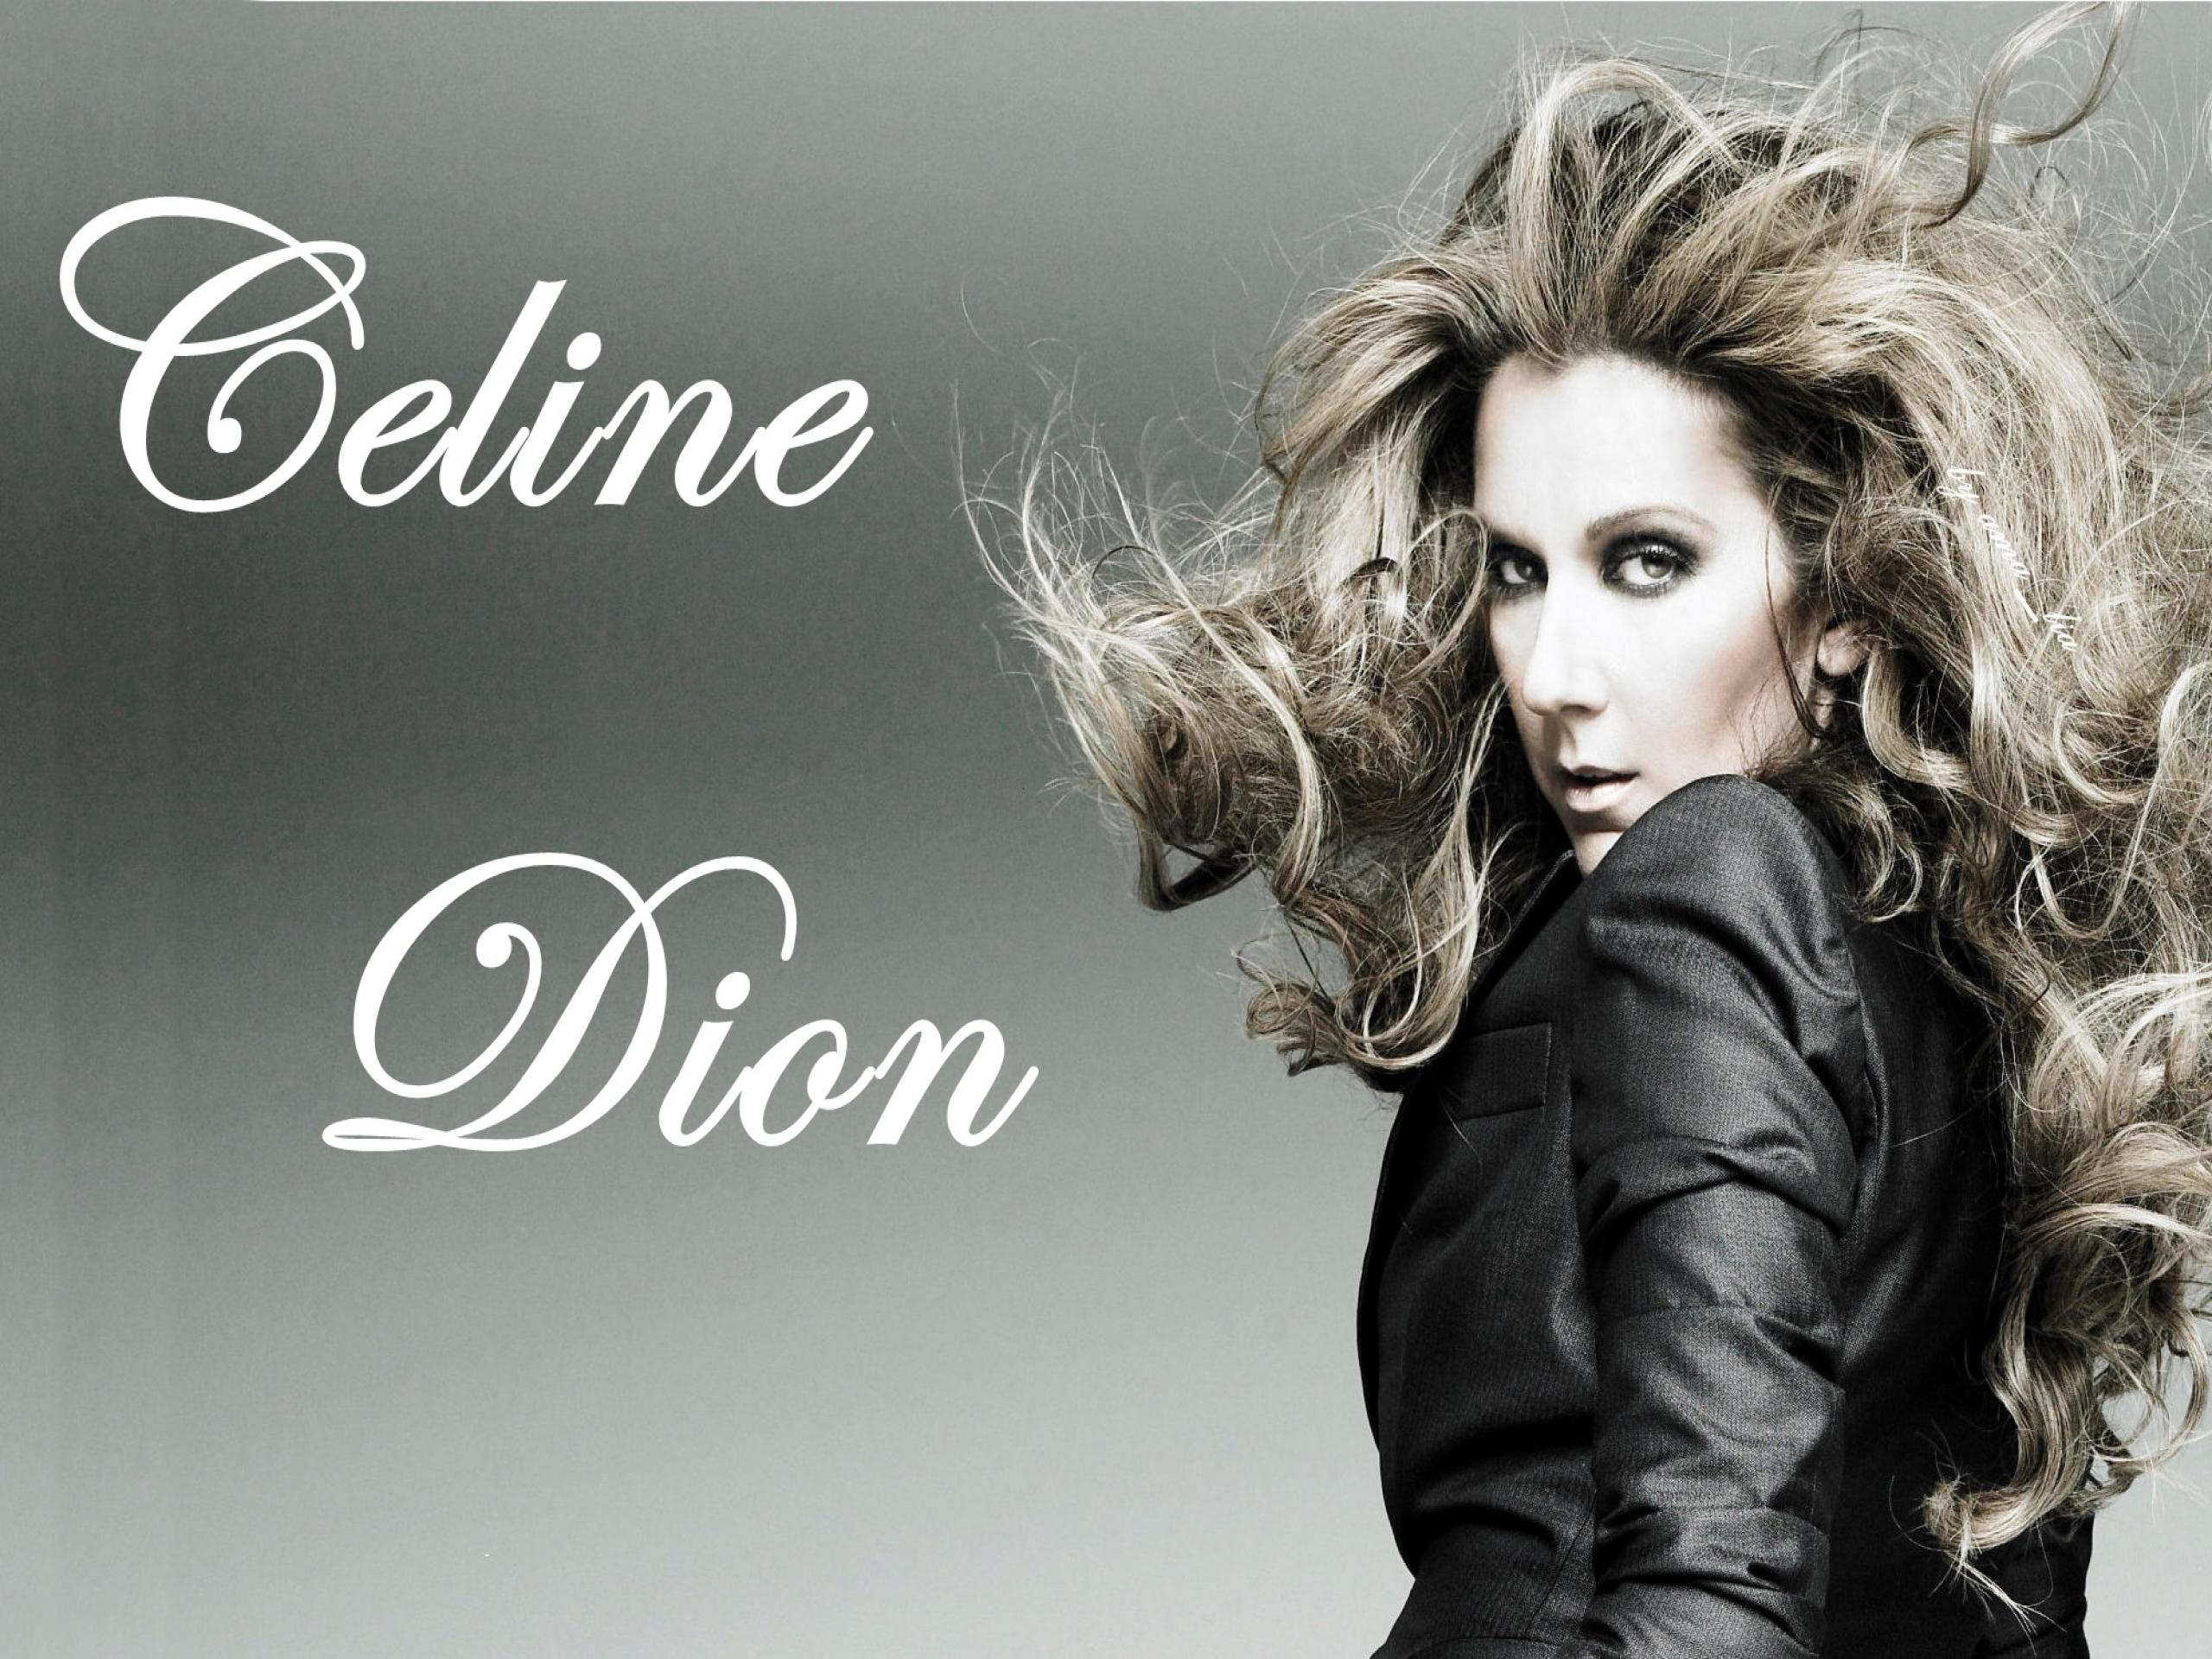 Celine Dion Wallpaper Full HD Q97m4c5 4usky